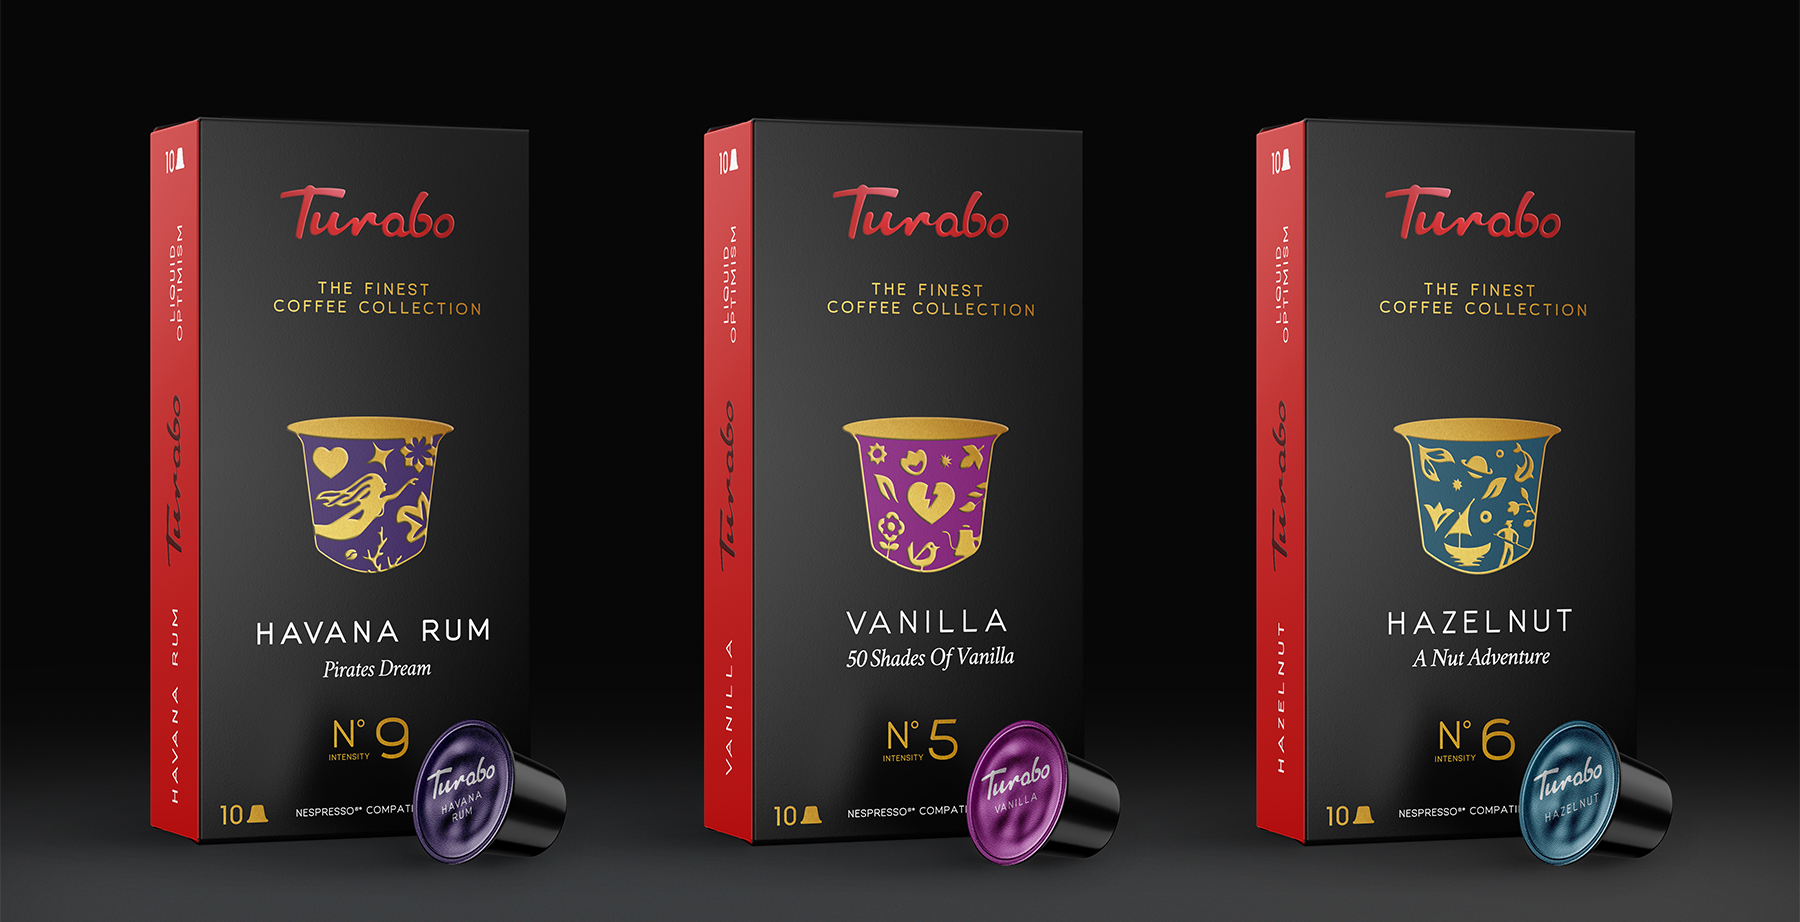 Turabo coffee packaging design